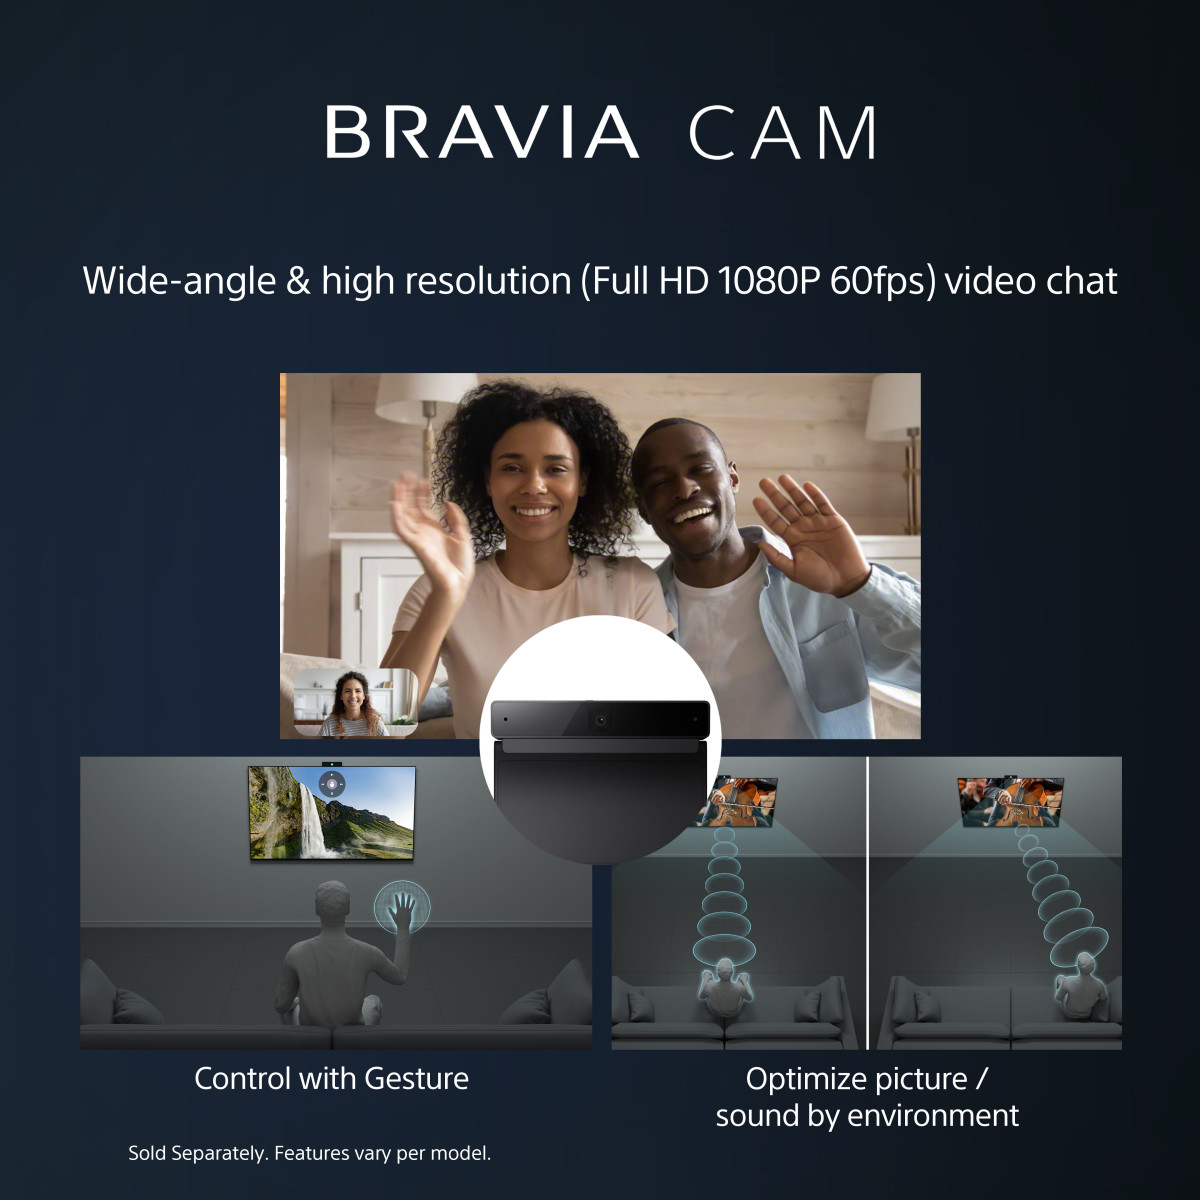 55 A80L Bravia 4K UHD OLED Smart TV